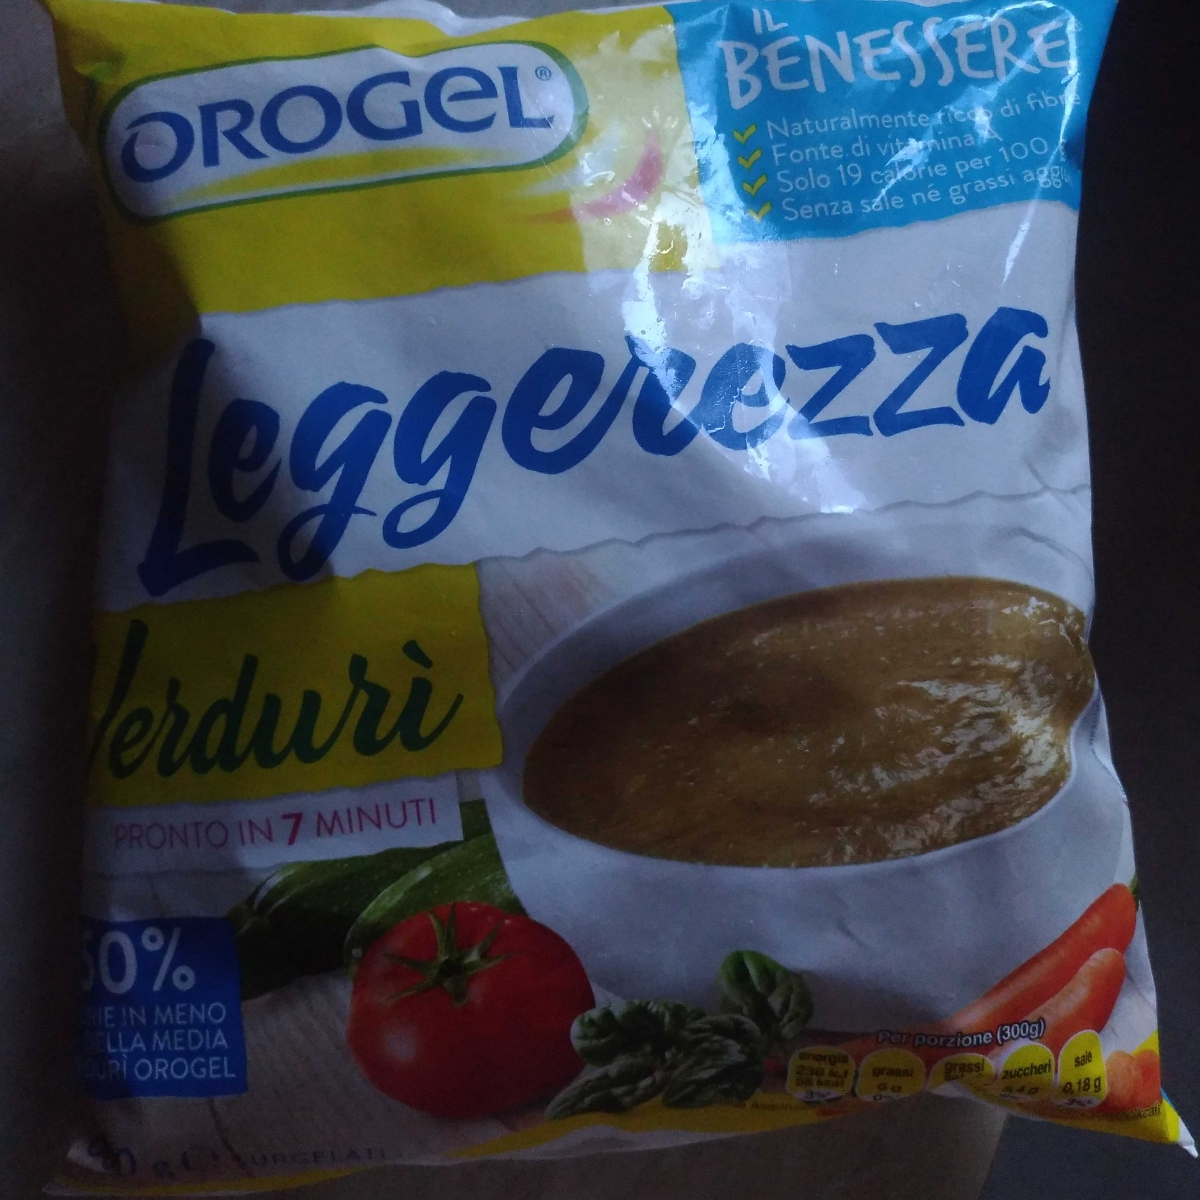 Orogel Leggerezza Verdurì Reviews | abillion